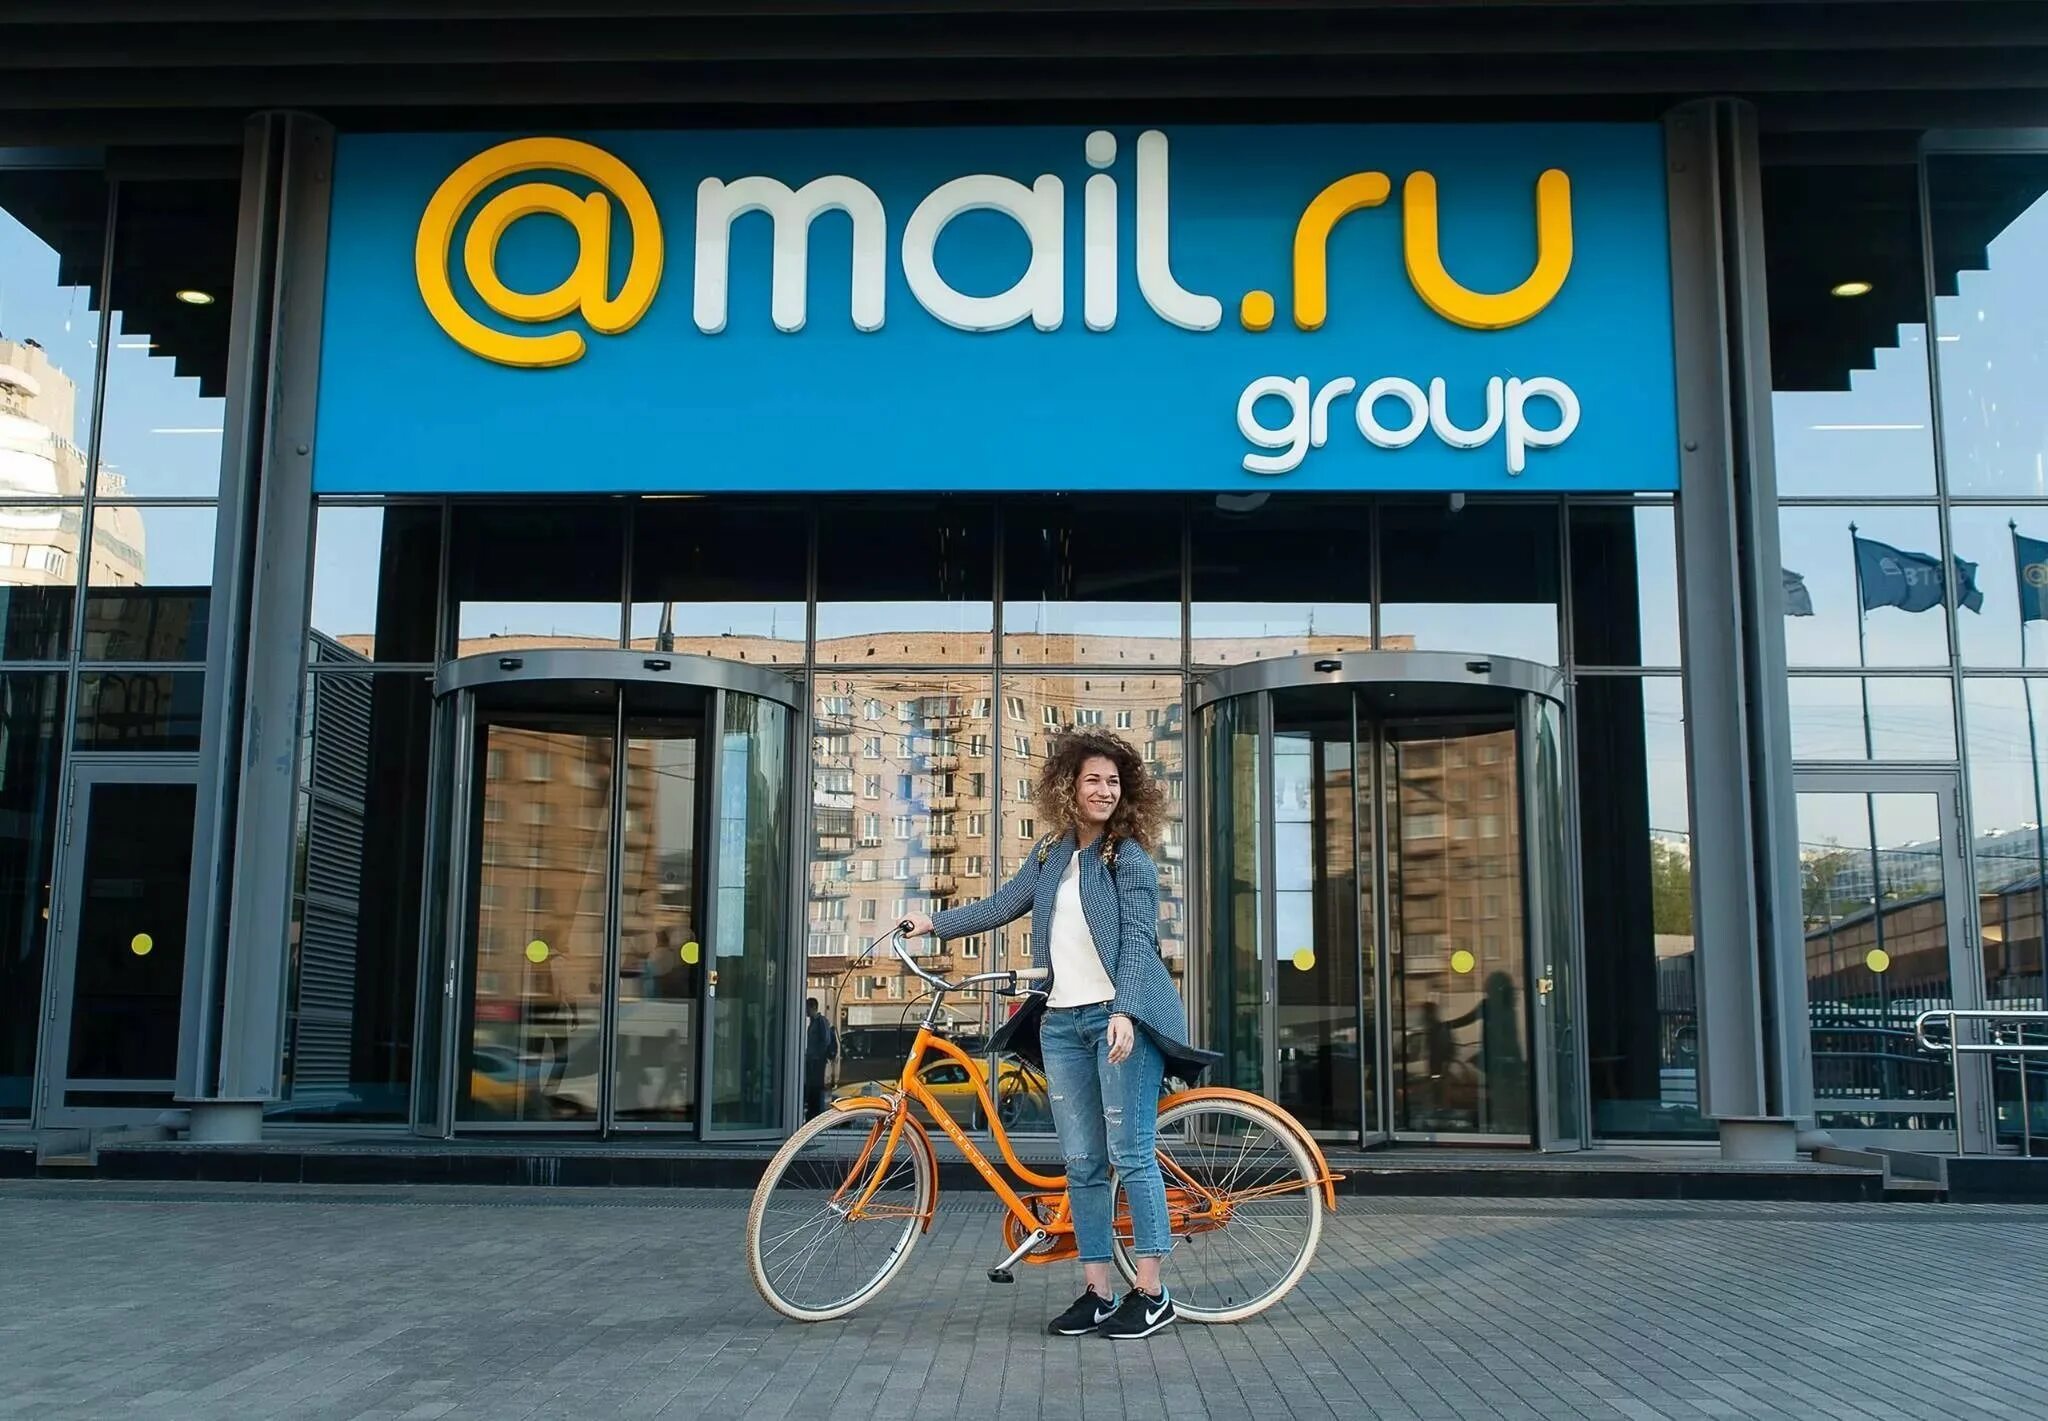 Life mail ru. Майл ру. С М Л. Mail ru Group. Майл Гроуп.